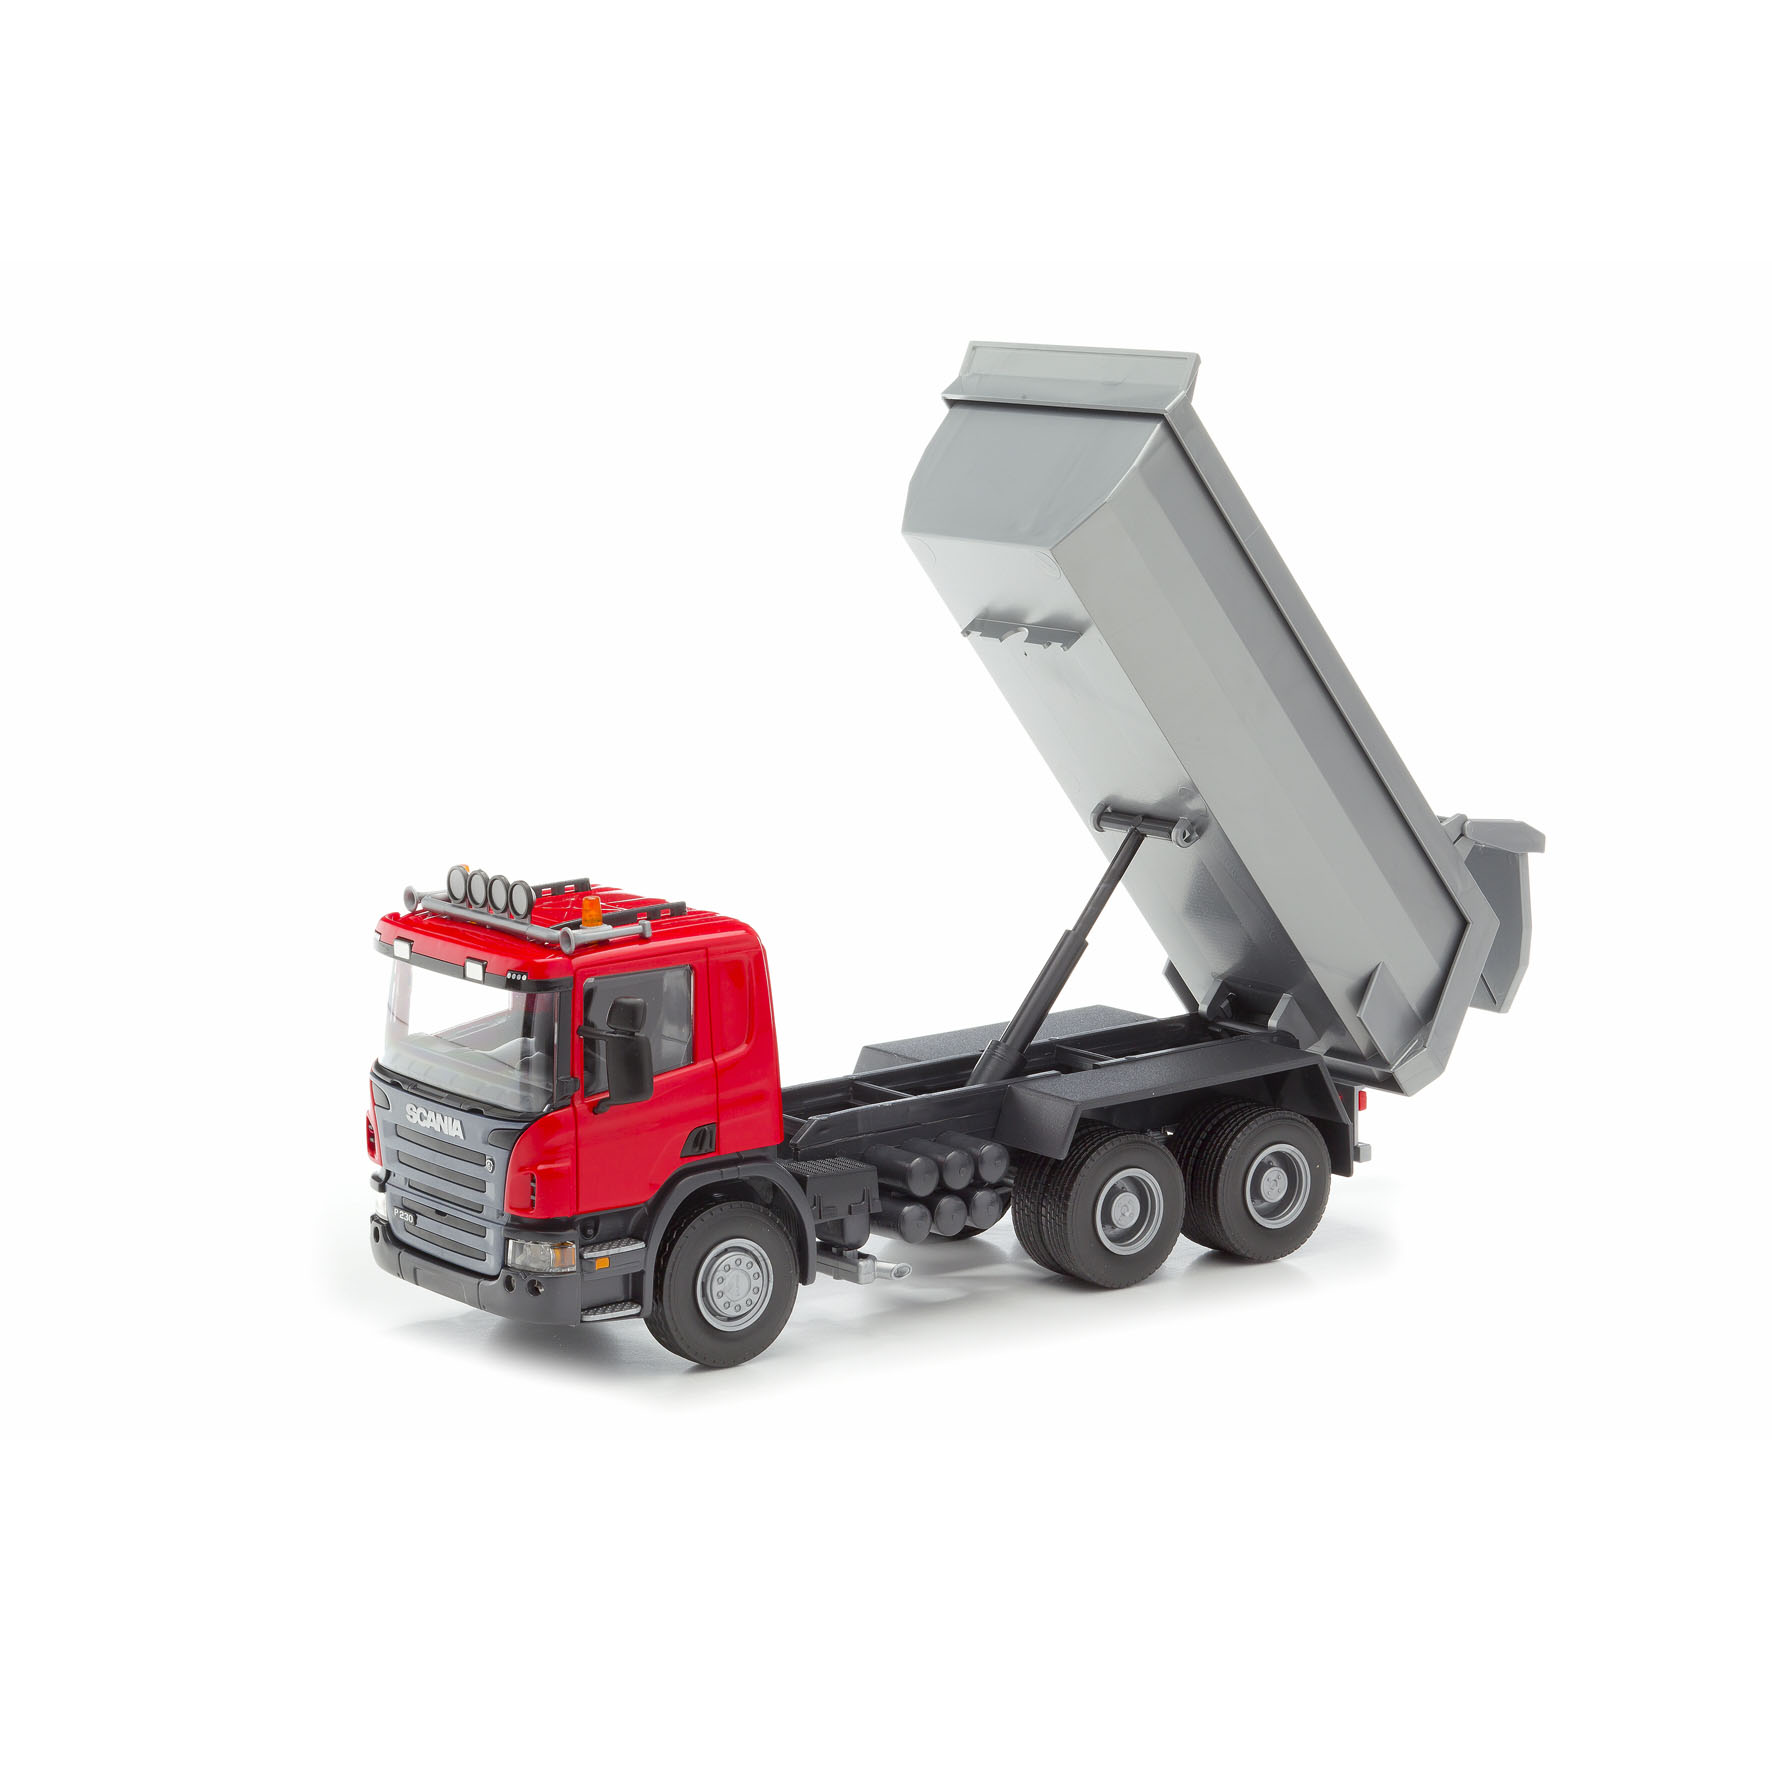 Toy trucks emek toy car waste truck scania 3-axle red 1:25